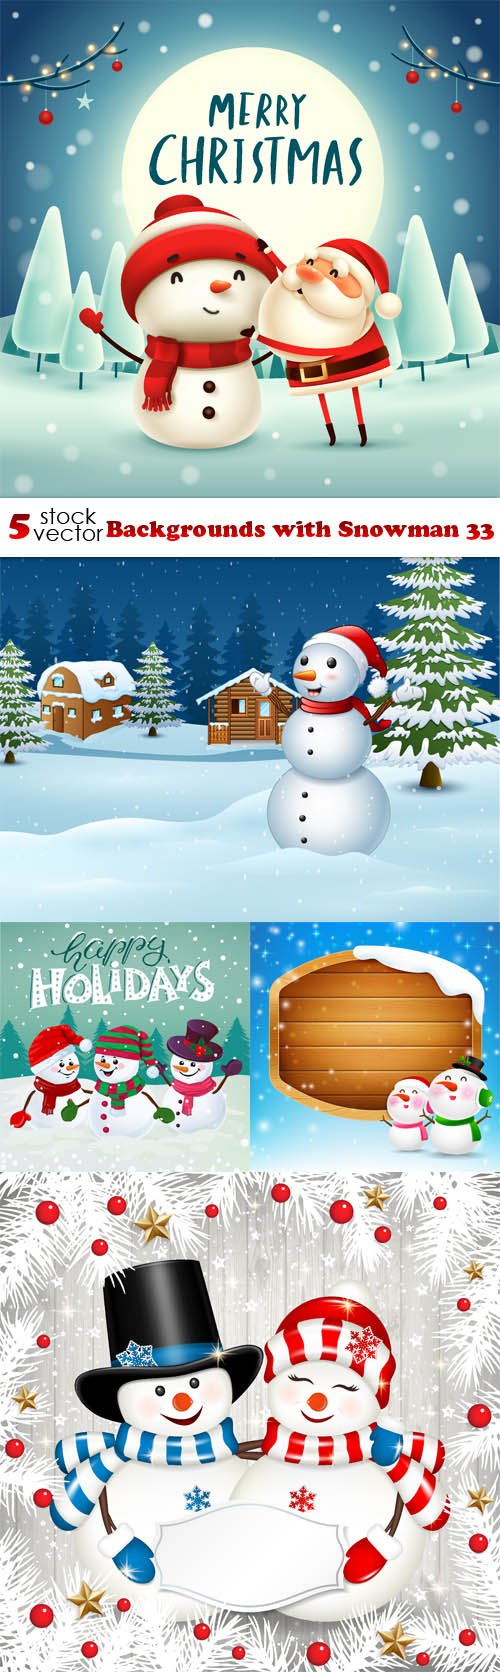 Vectors - Backgrounds with Snowman 33